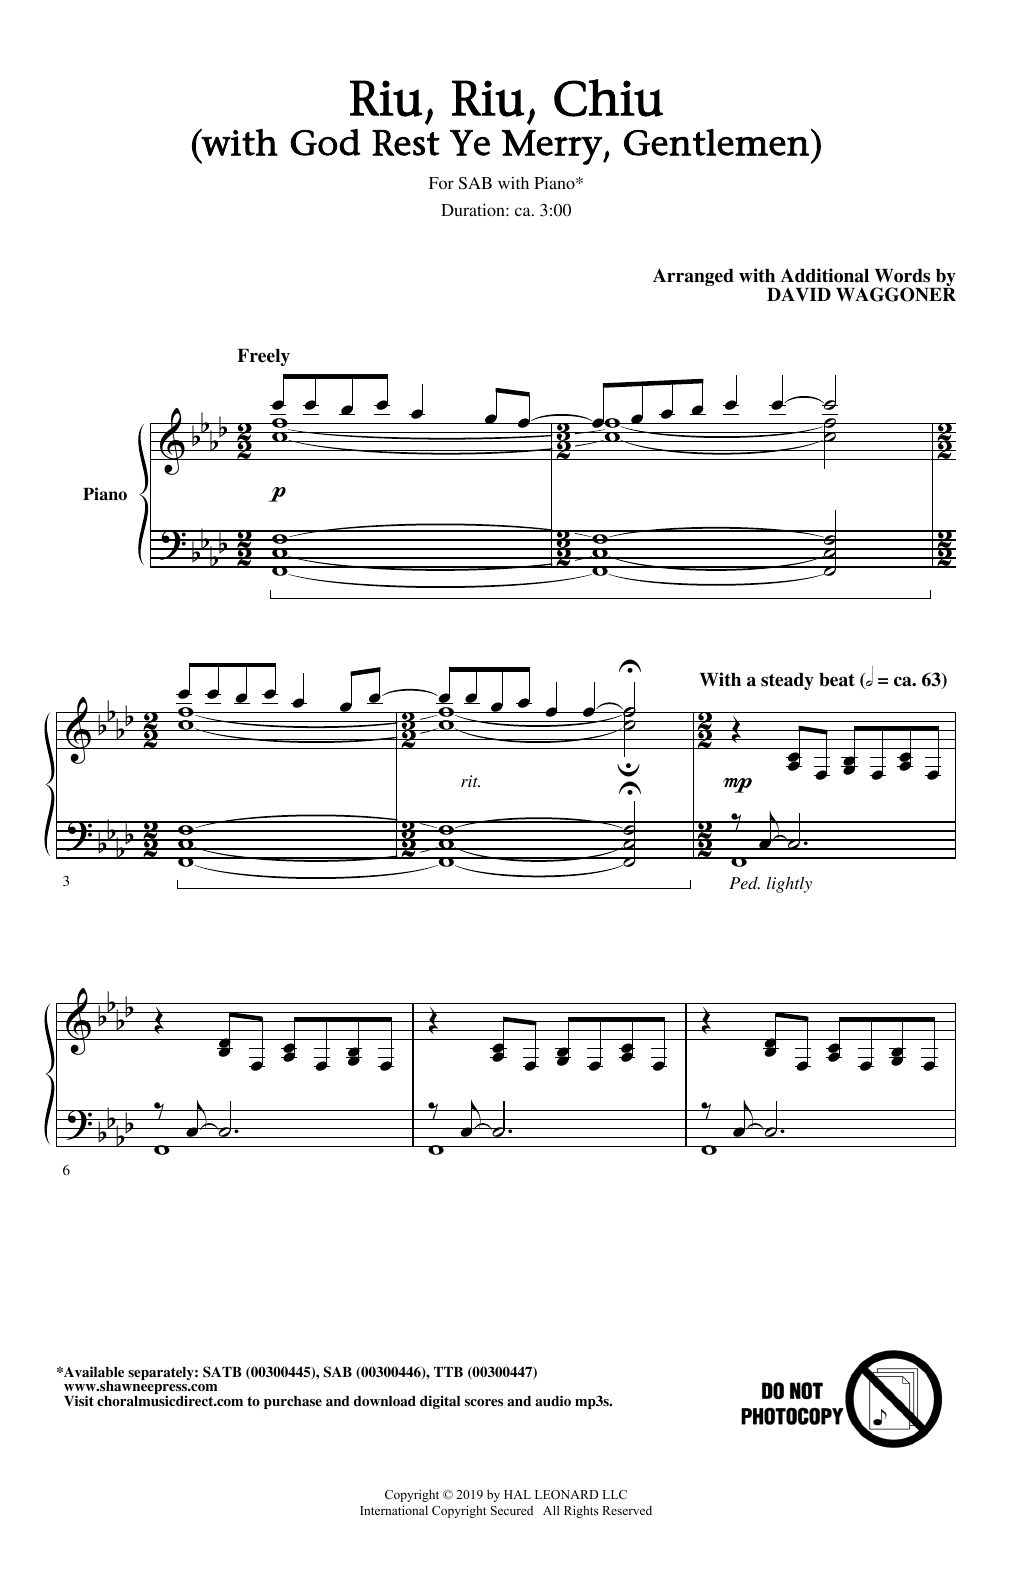 Traditional Carol Riu, Riu, Chiu (with God Rest Ye Merry, Gentlemen) (arr. David Waggoner) Sheet Music Notes & Chords for TTBB Choir - Download or Print PDF